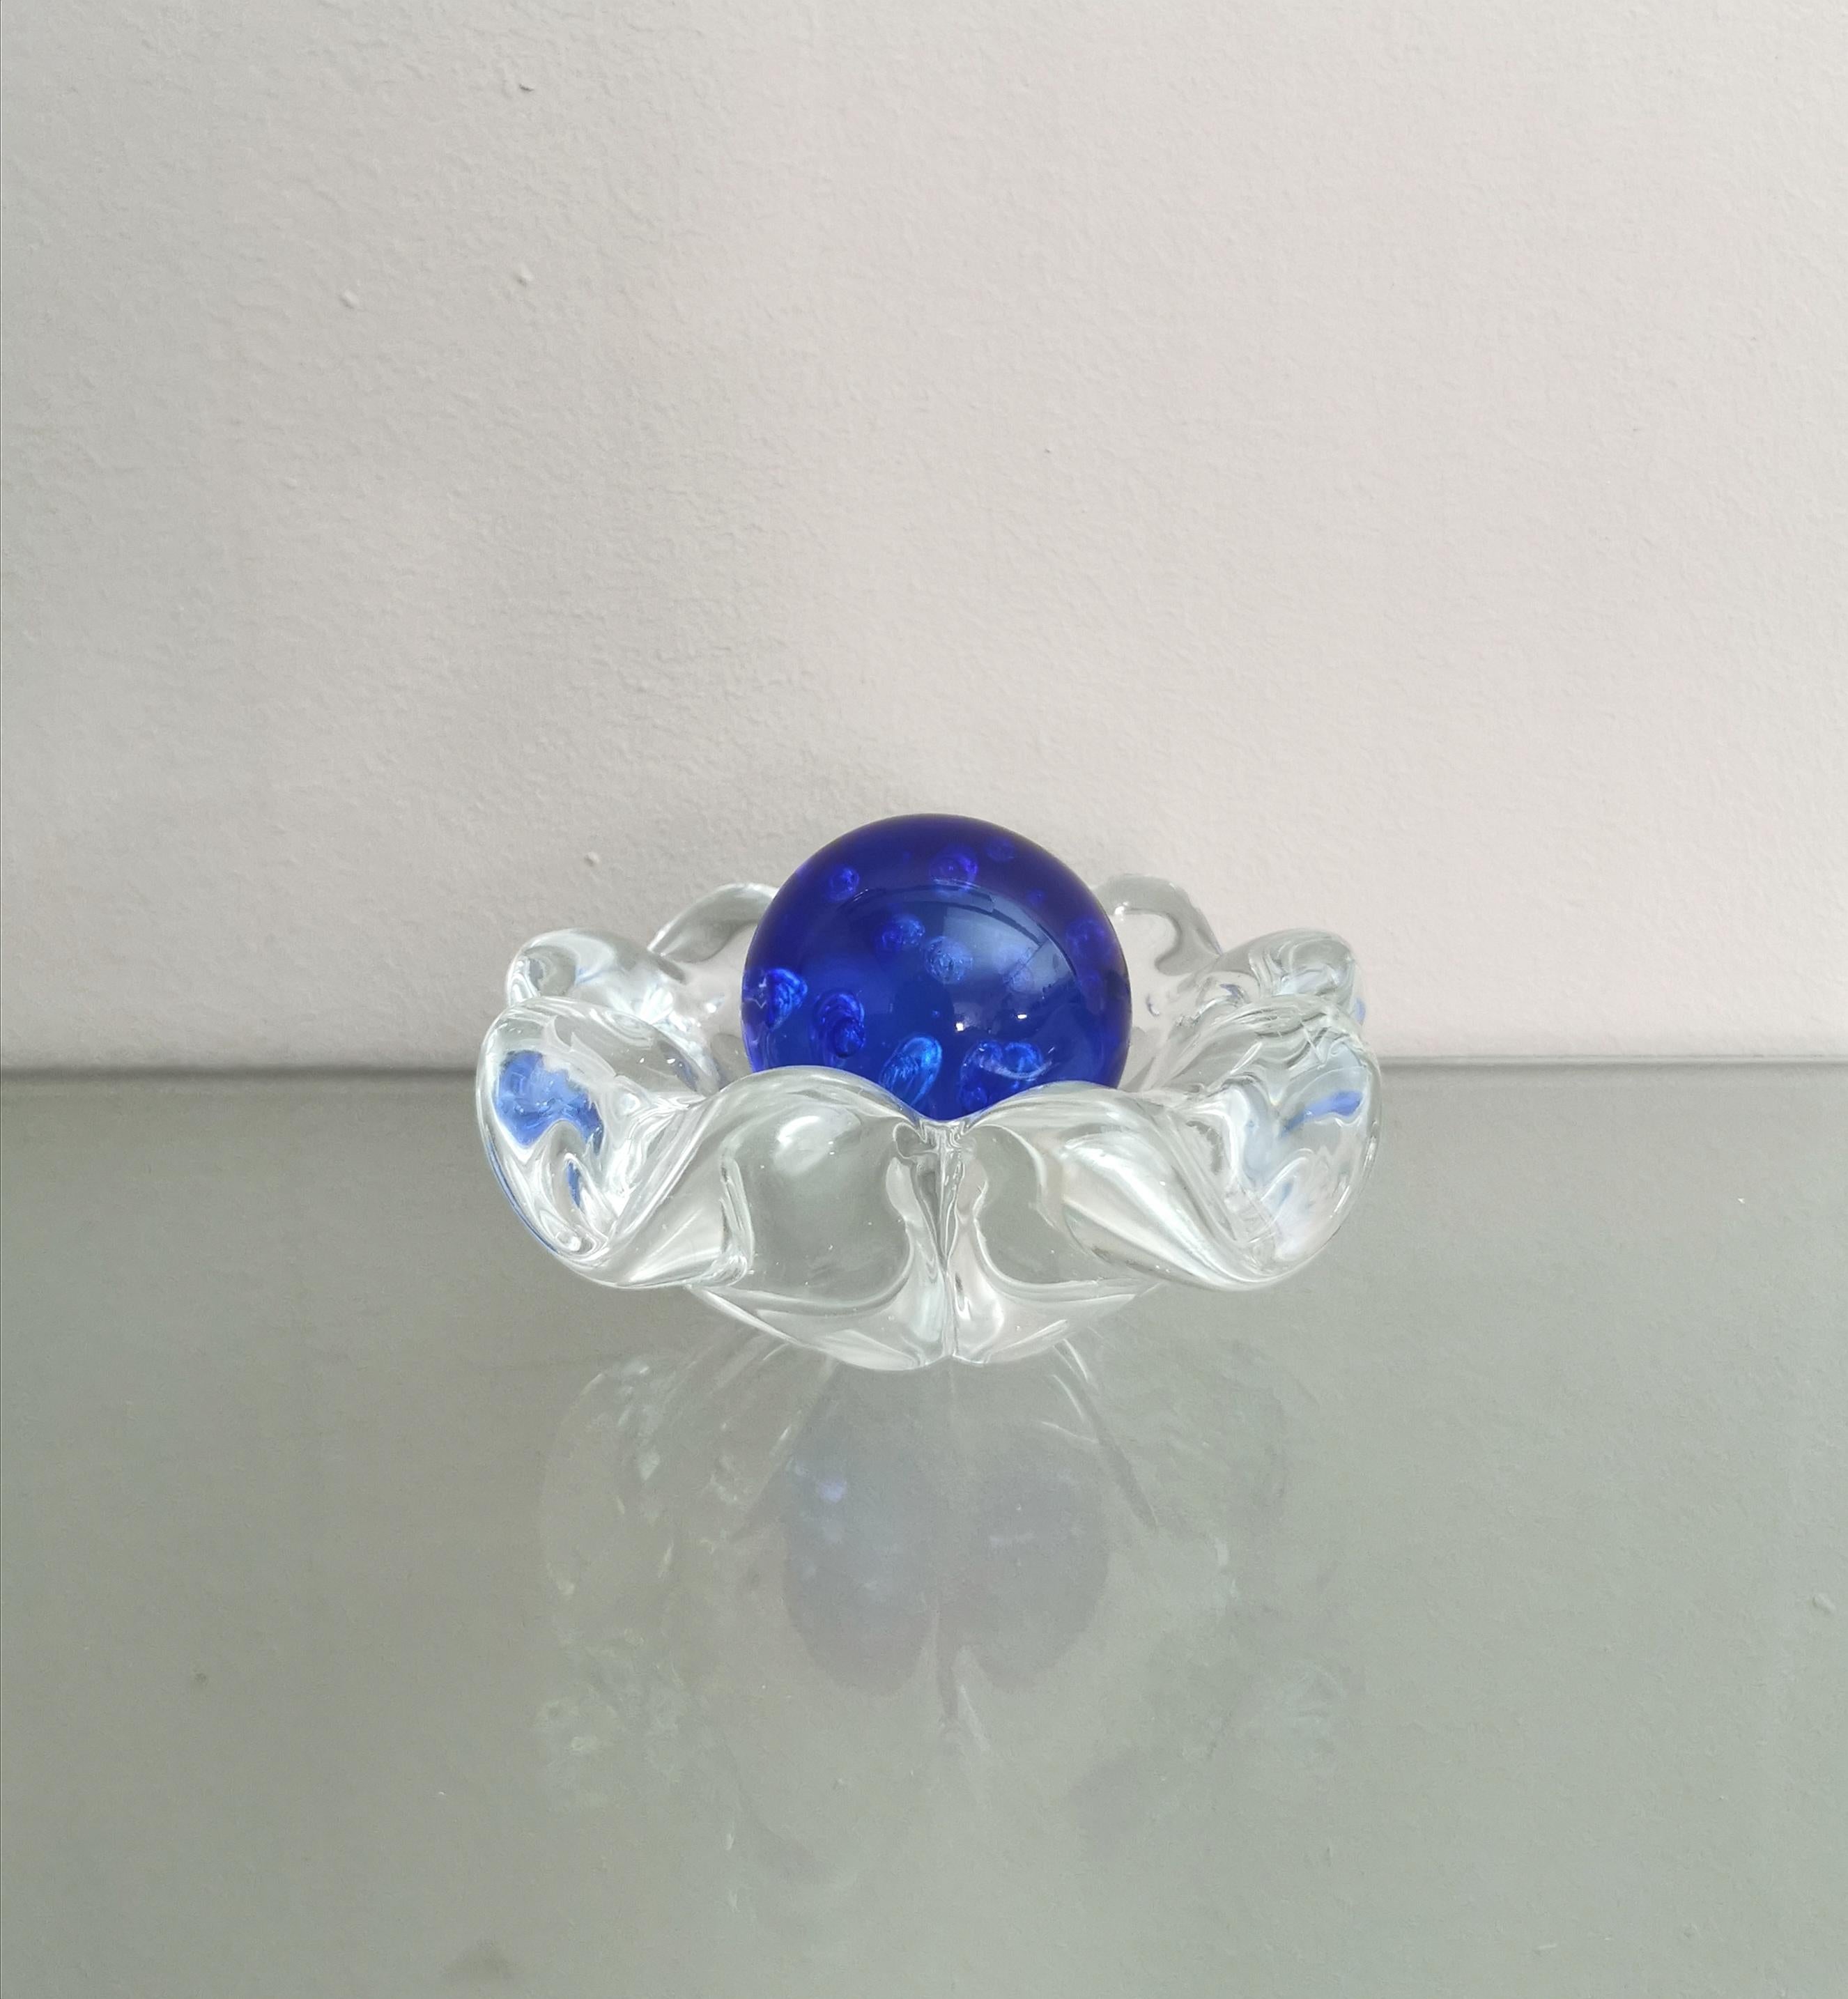 Mid-Century Modern Midcentury Murano Glass Decorative Object Flavio Poli Blue Italian Design 1970s